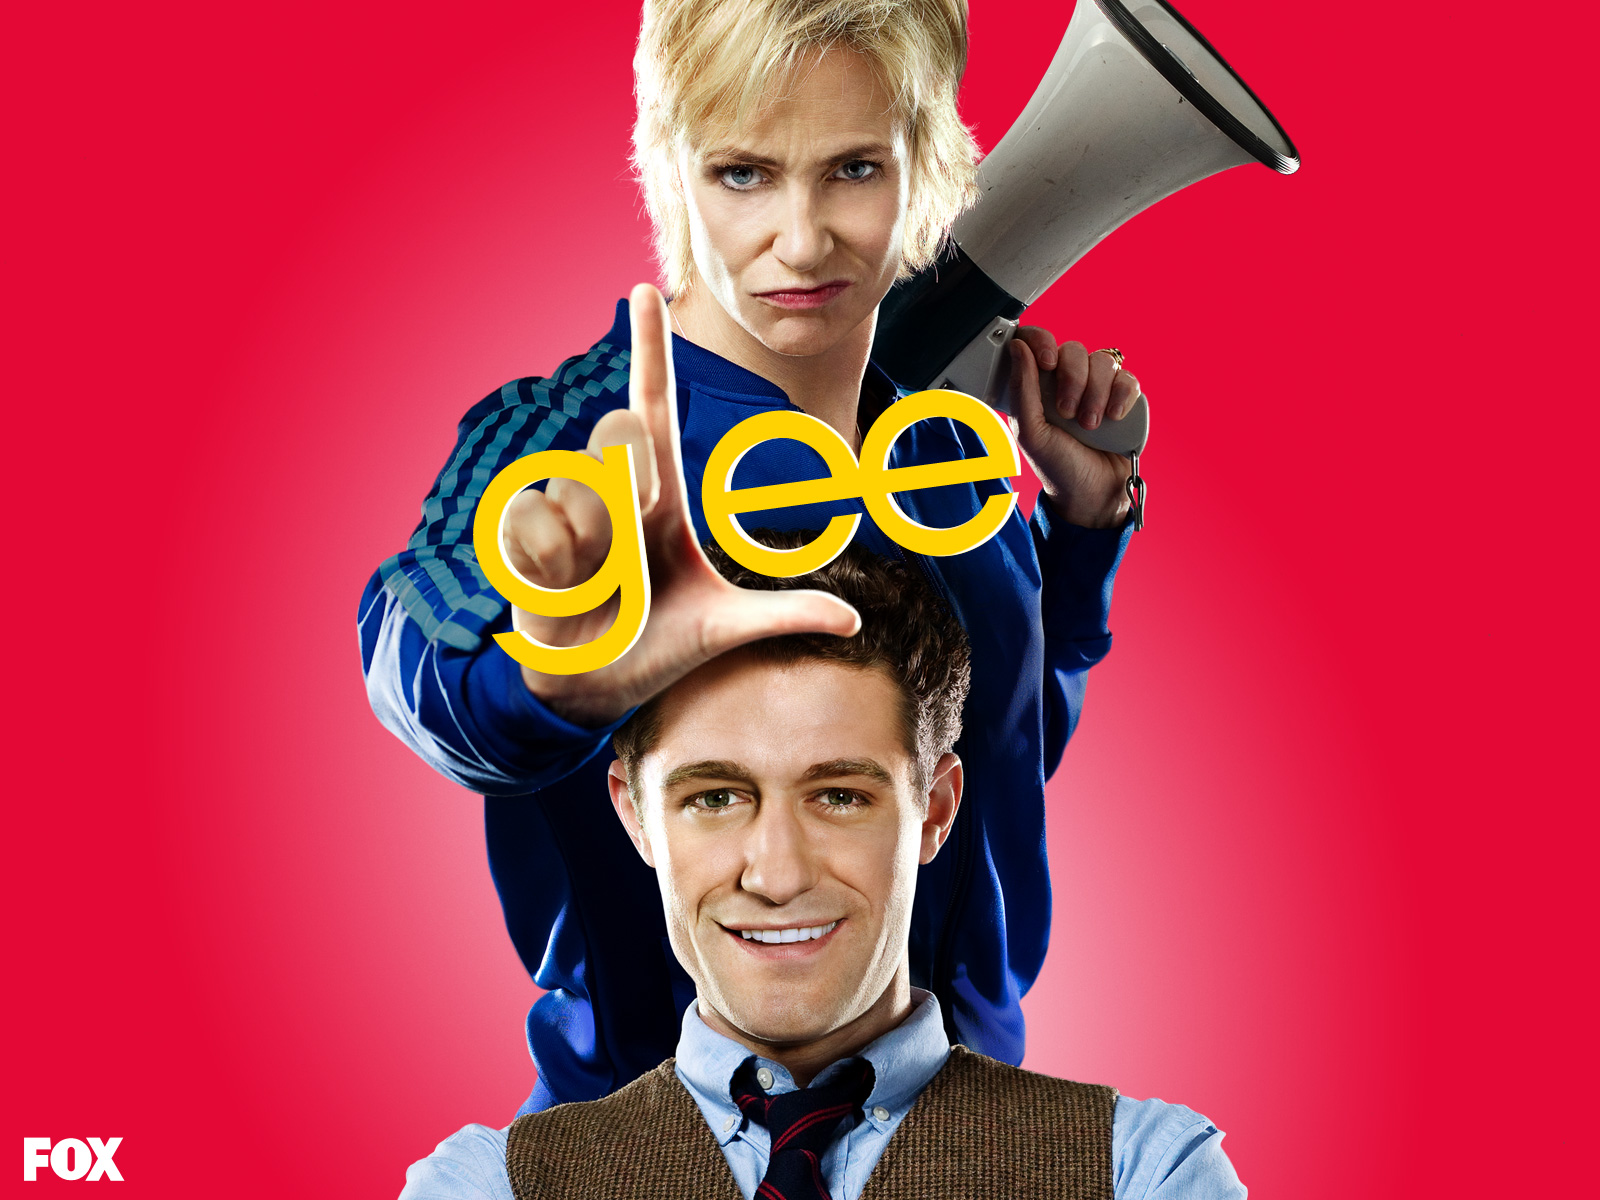 TV Show Glee Wallpaper